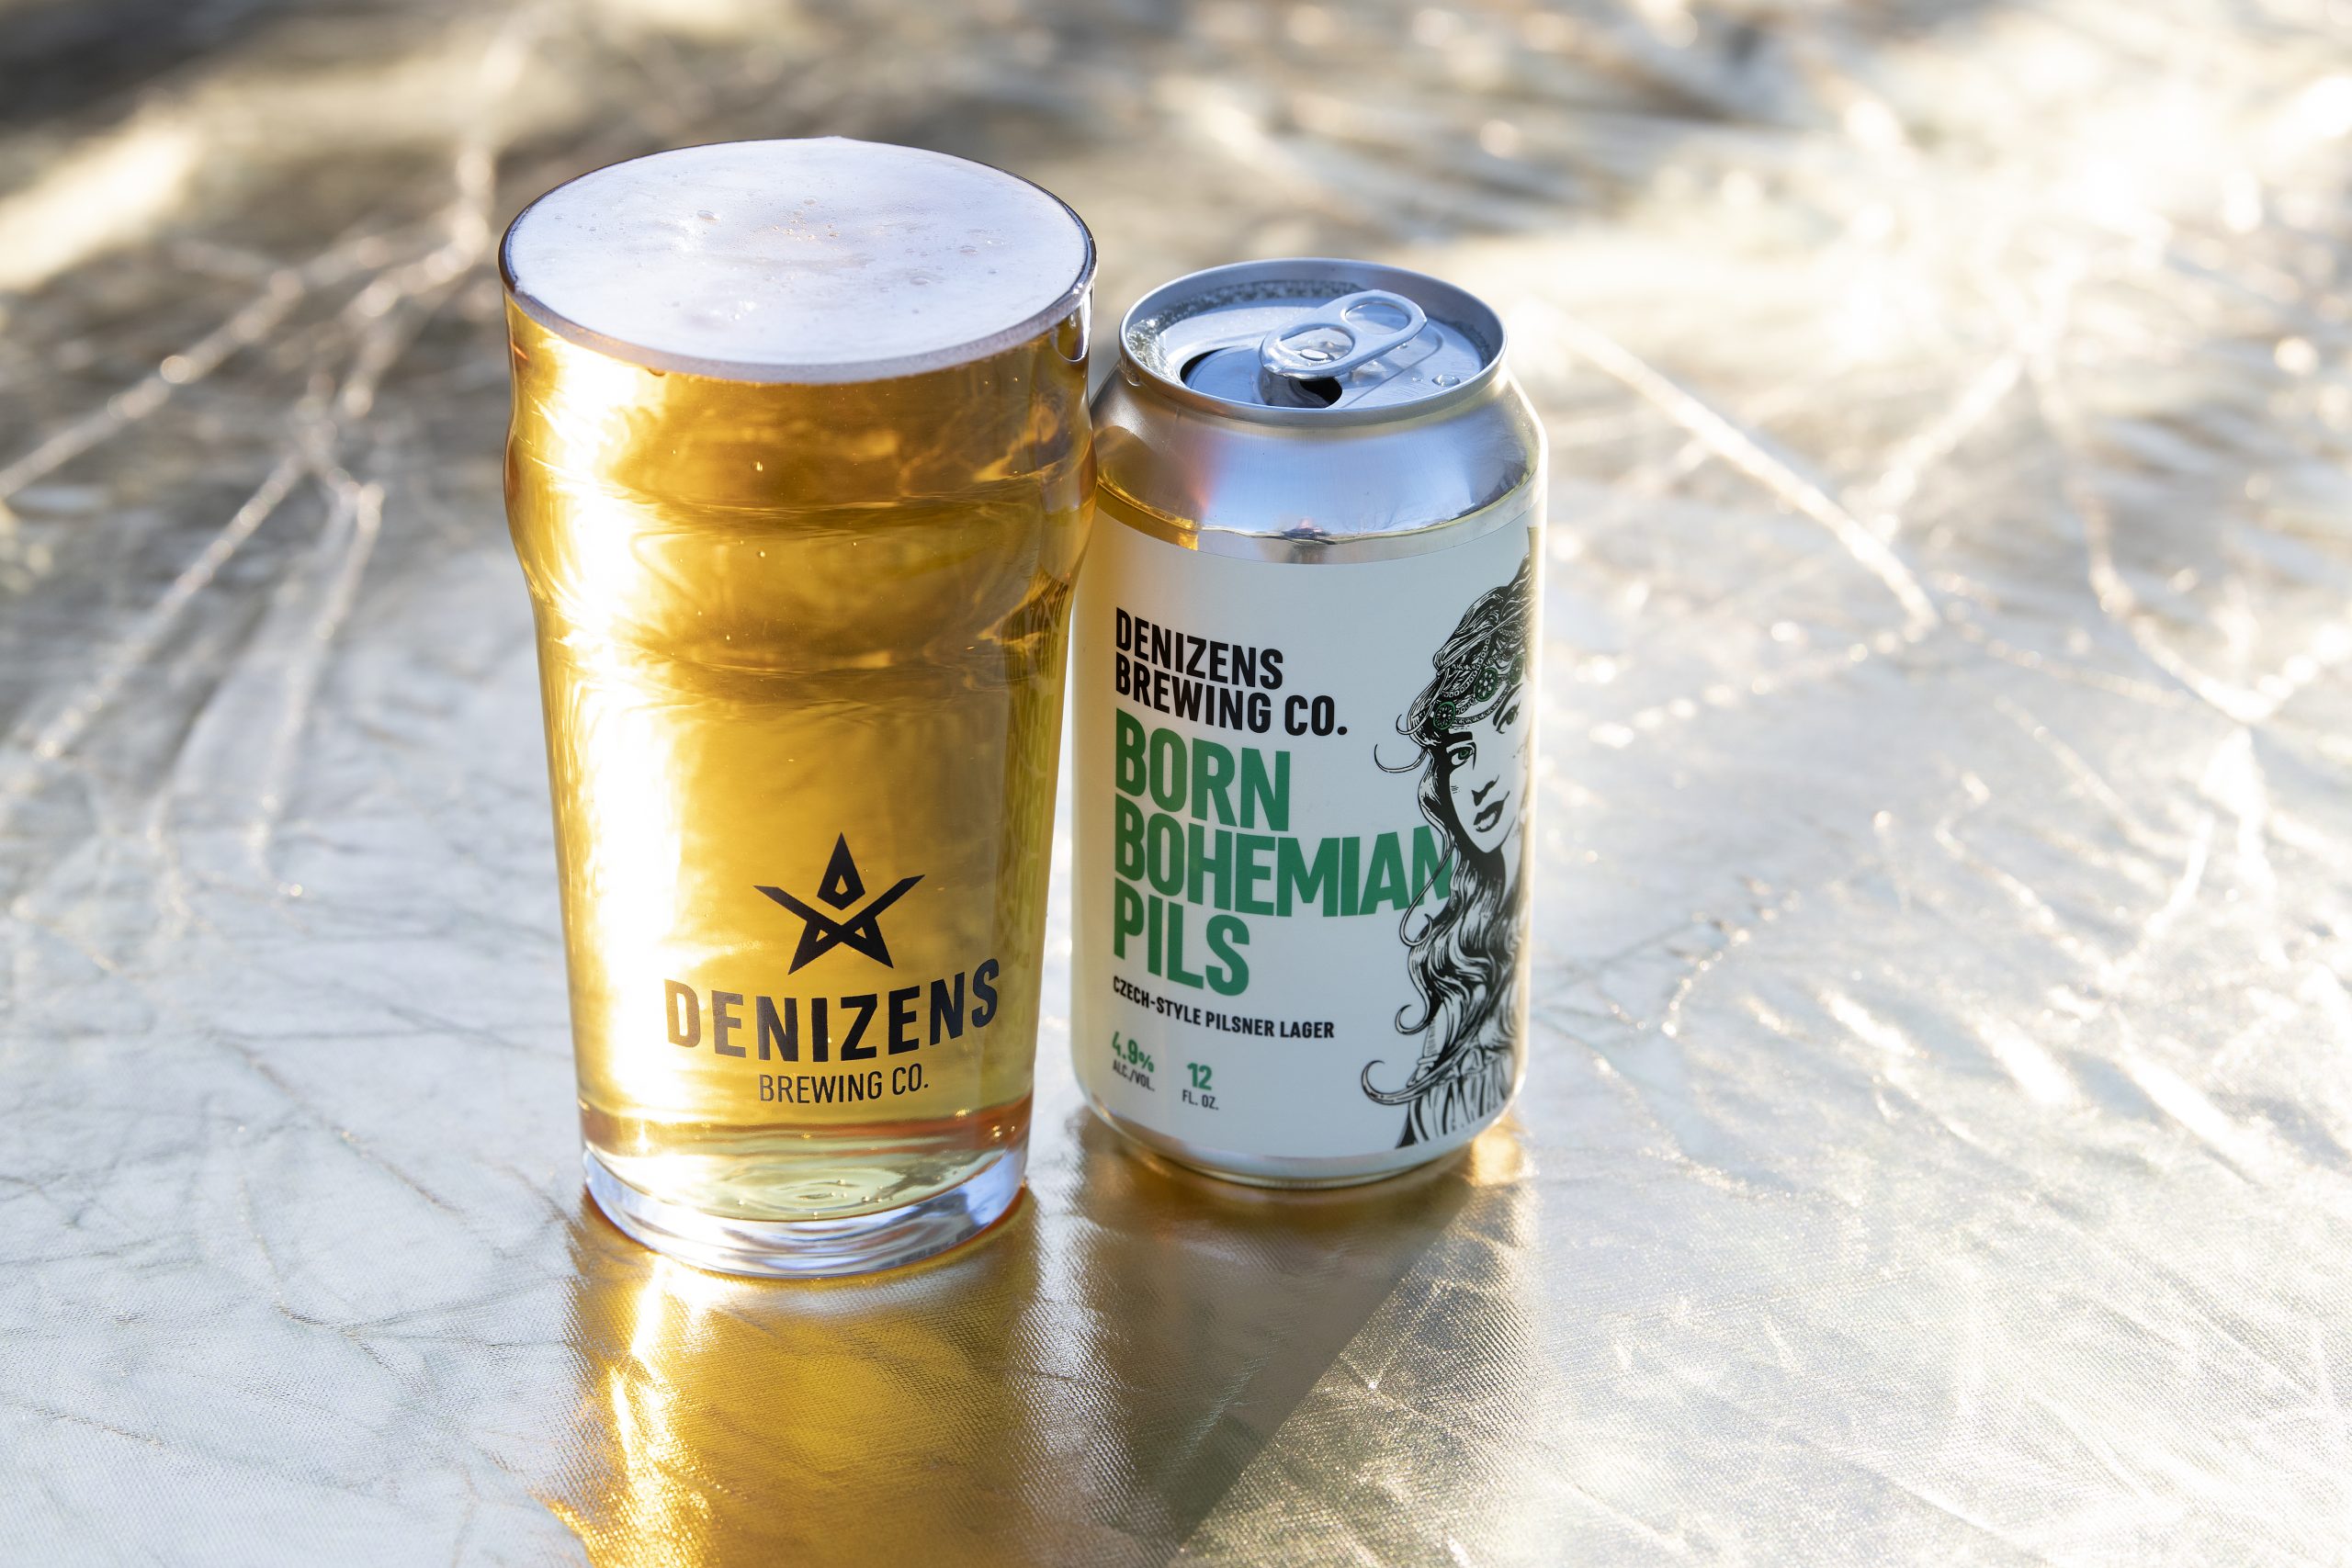 Denizens Brewing Company Born Bohemian Pils